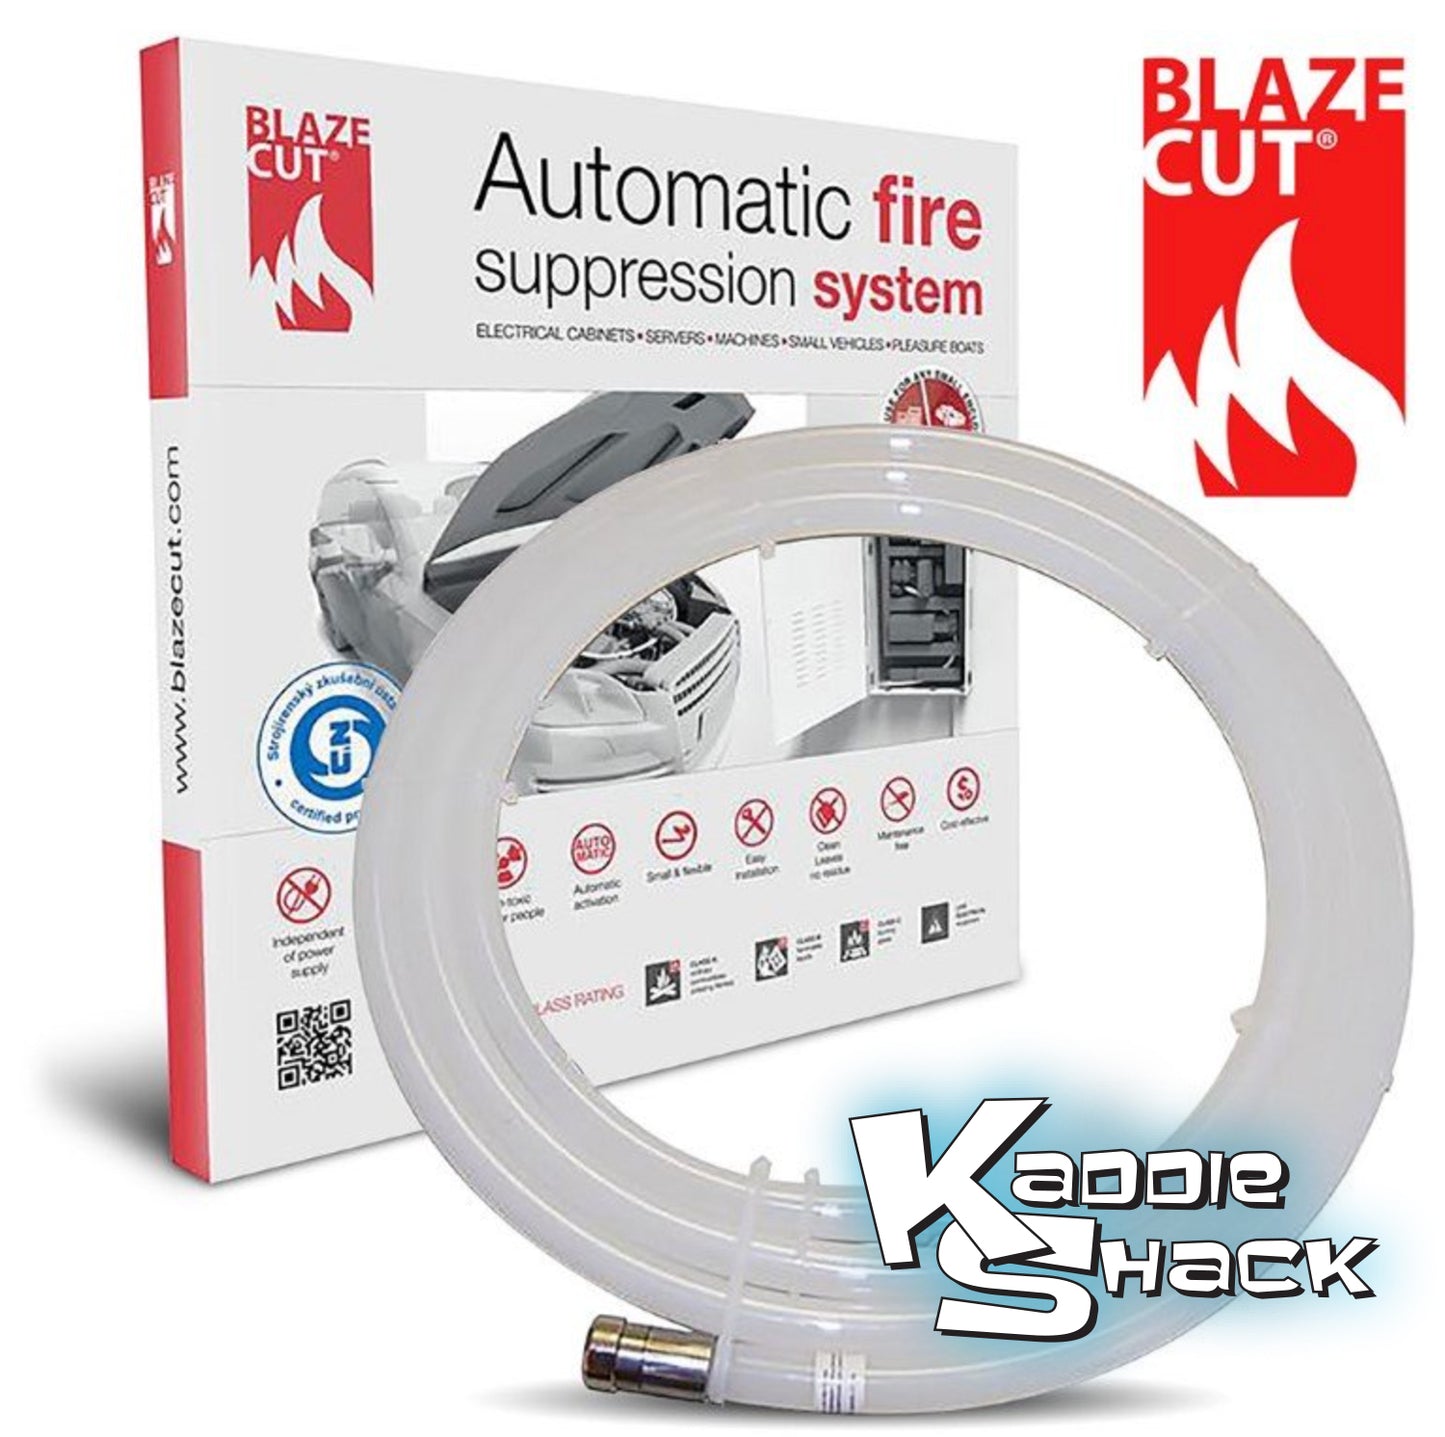 Blaze Cut Fire Suppression System, 6 Foot Length